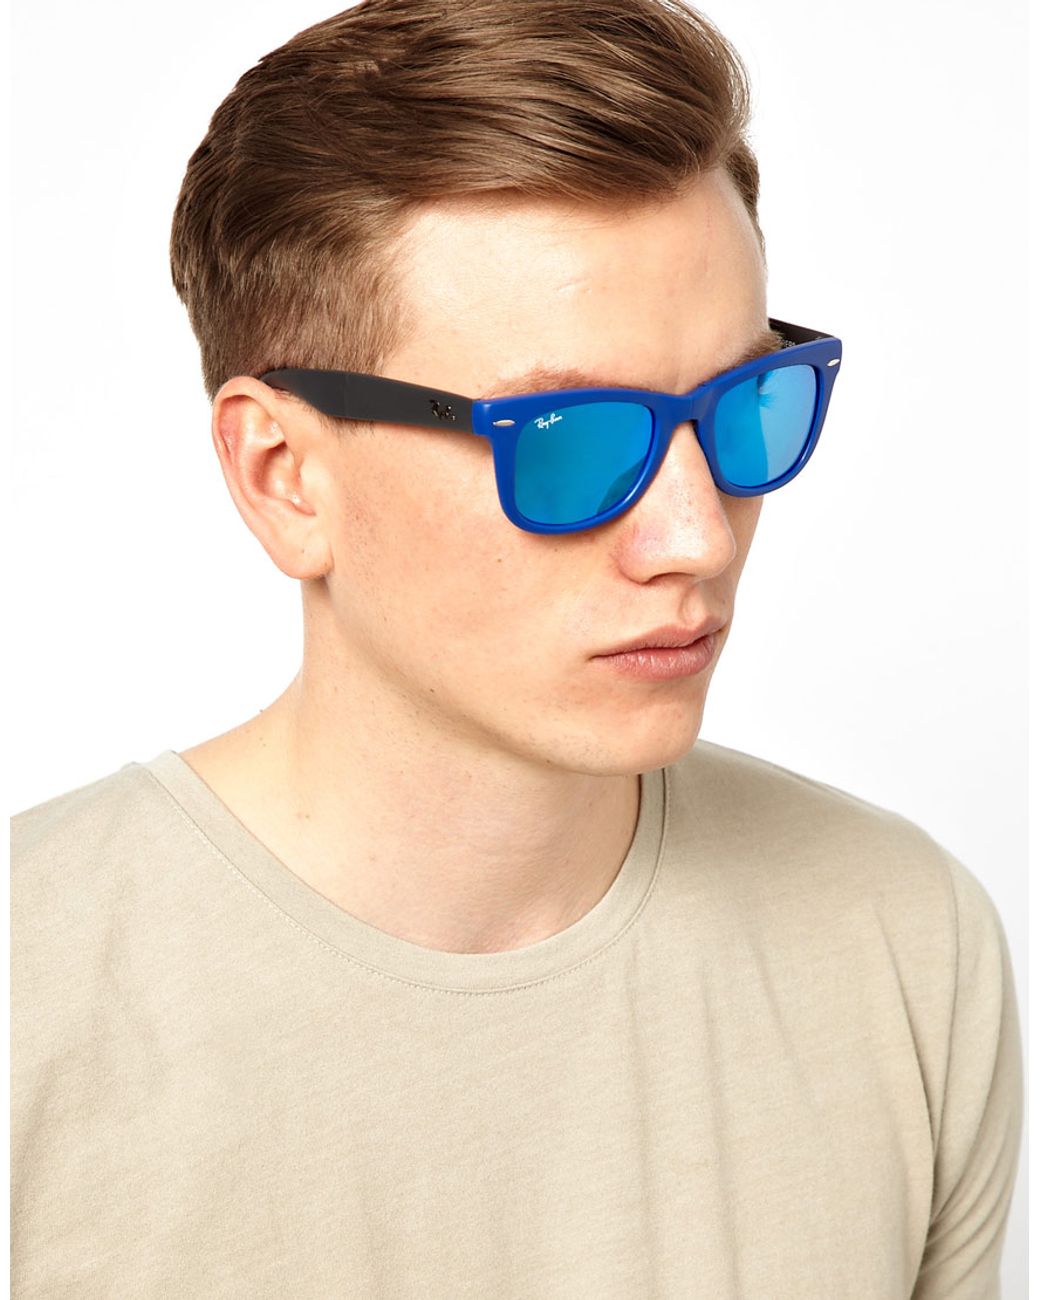 Ray Ban Folding Wayfarer Sunglasses In Blue For Men Lyst Canada